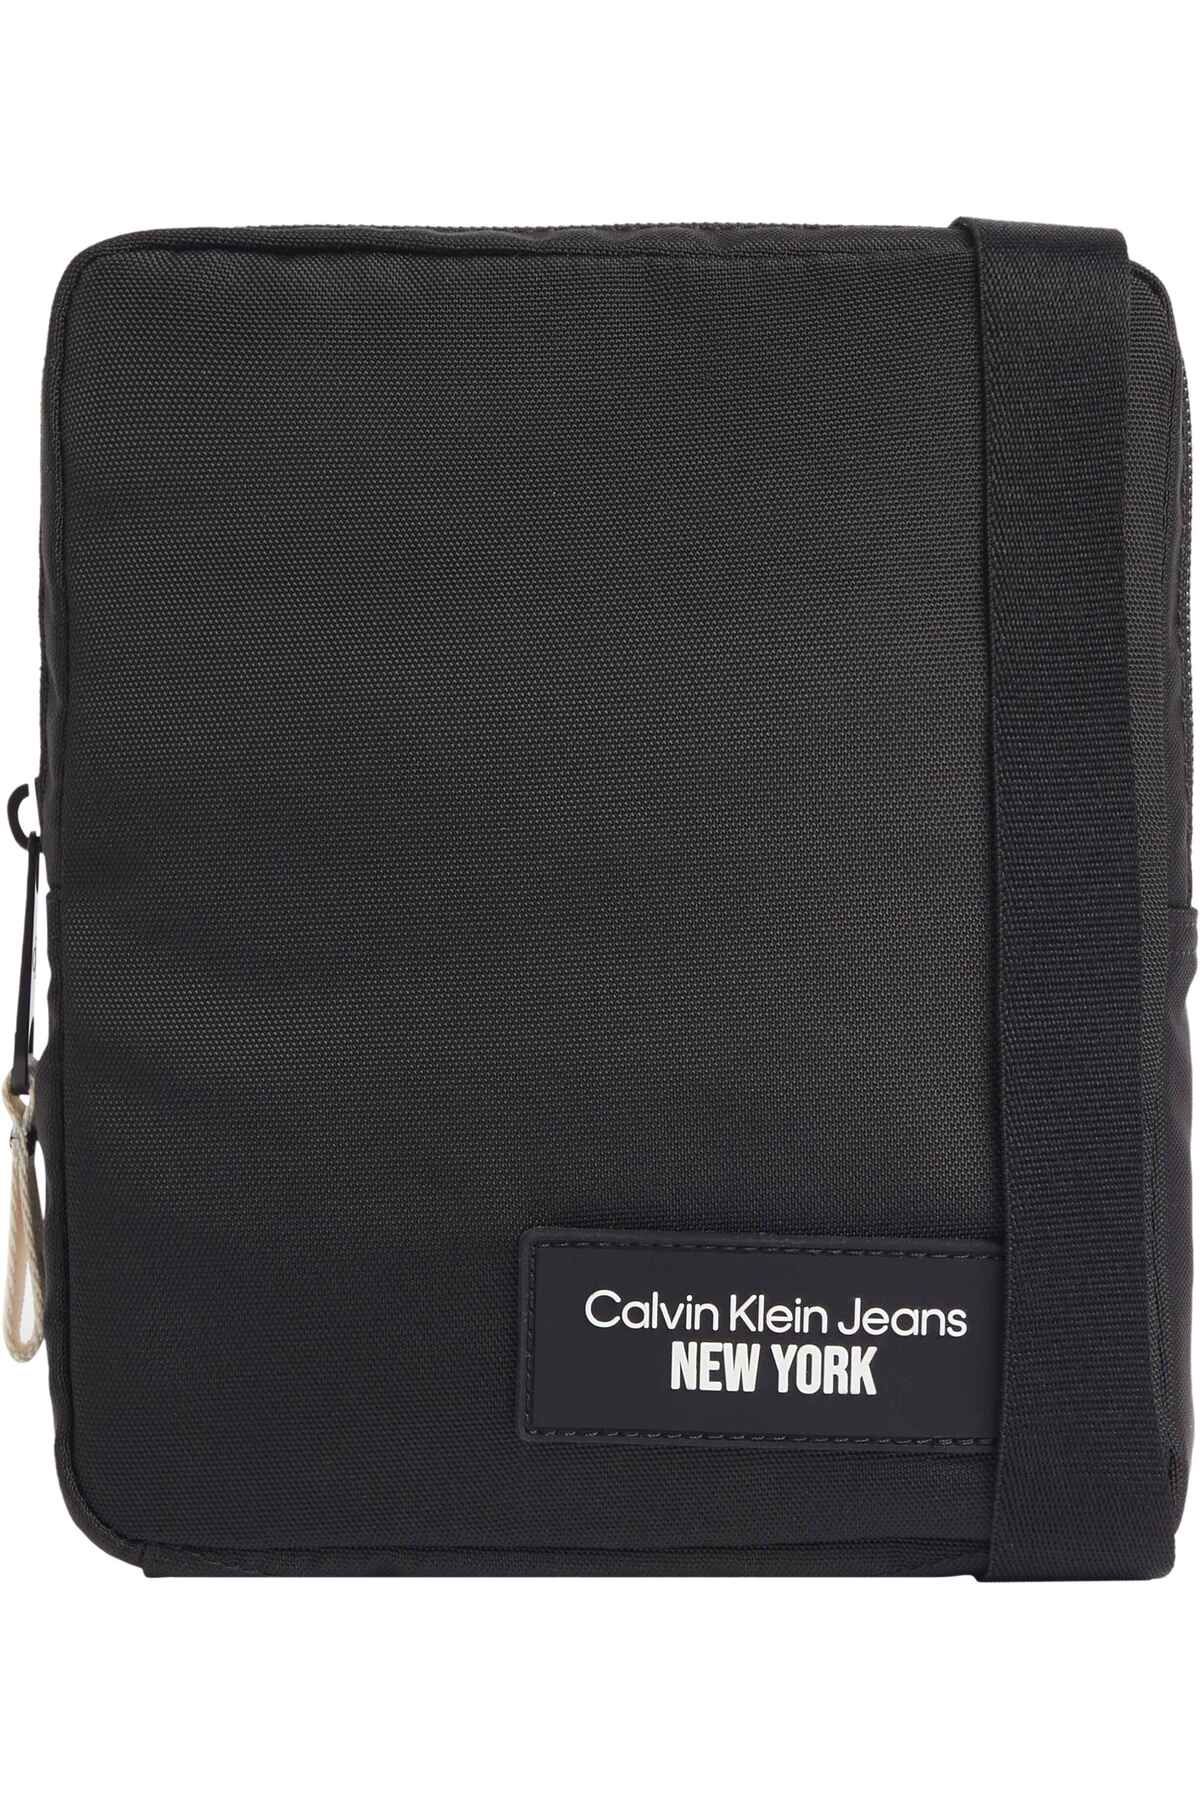 Calvin Klein SPORT ESSENTIALS REPORTER18 NY